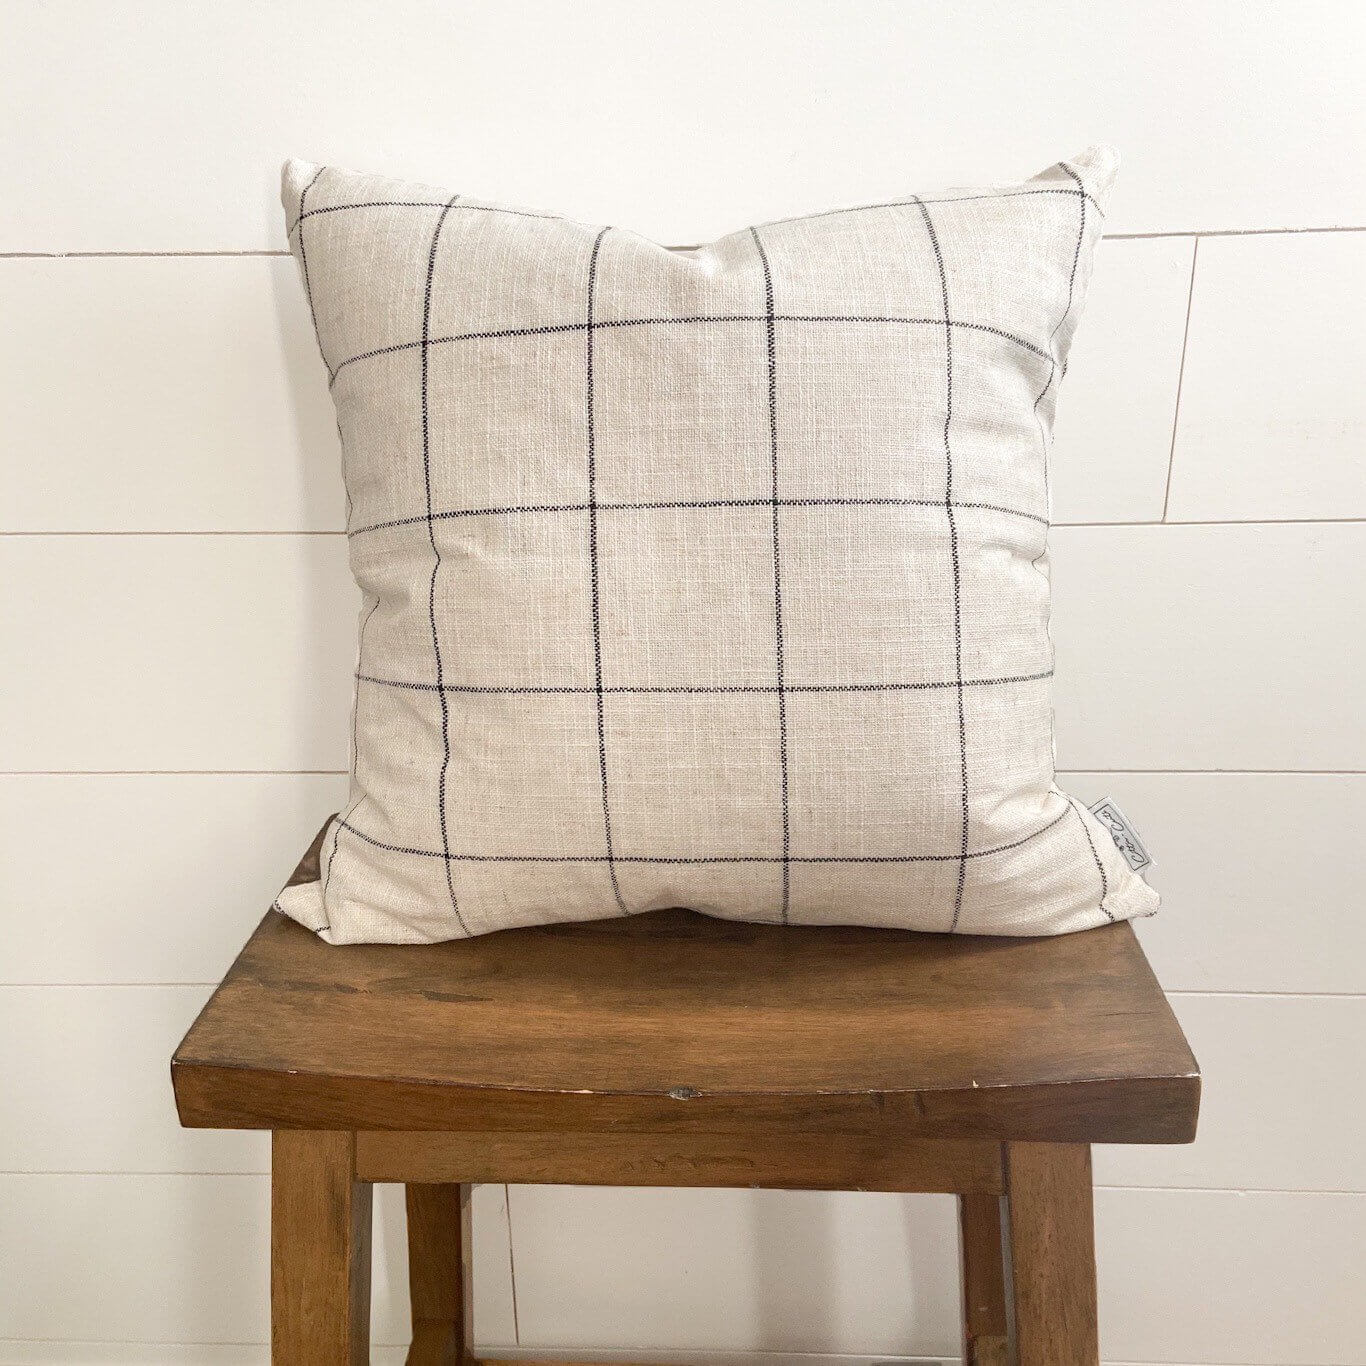 Textured Farmhouse Throw Pillow Covers 18x18 Decorative Pillows